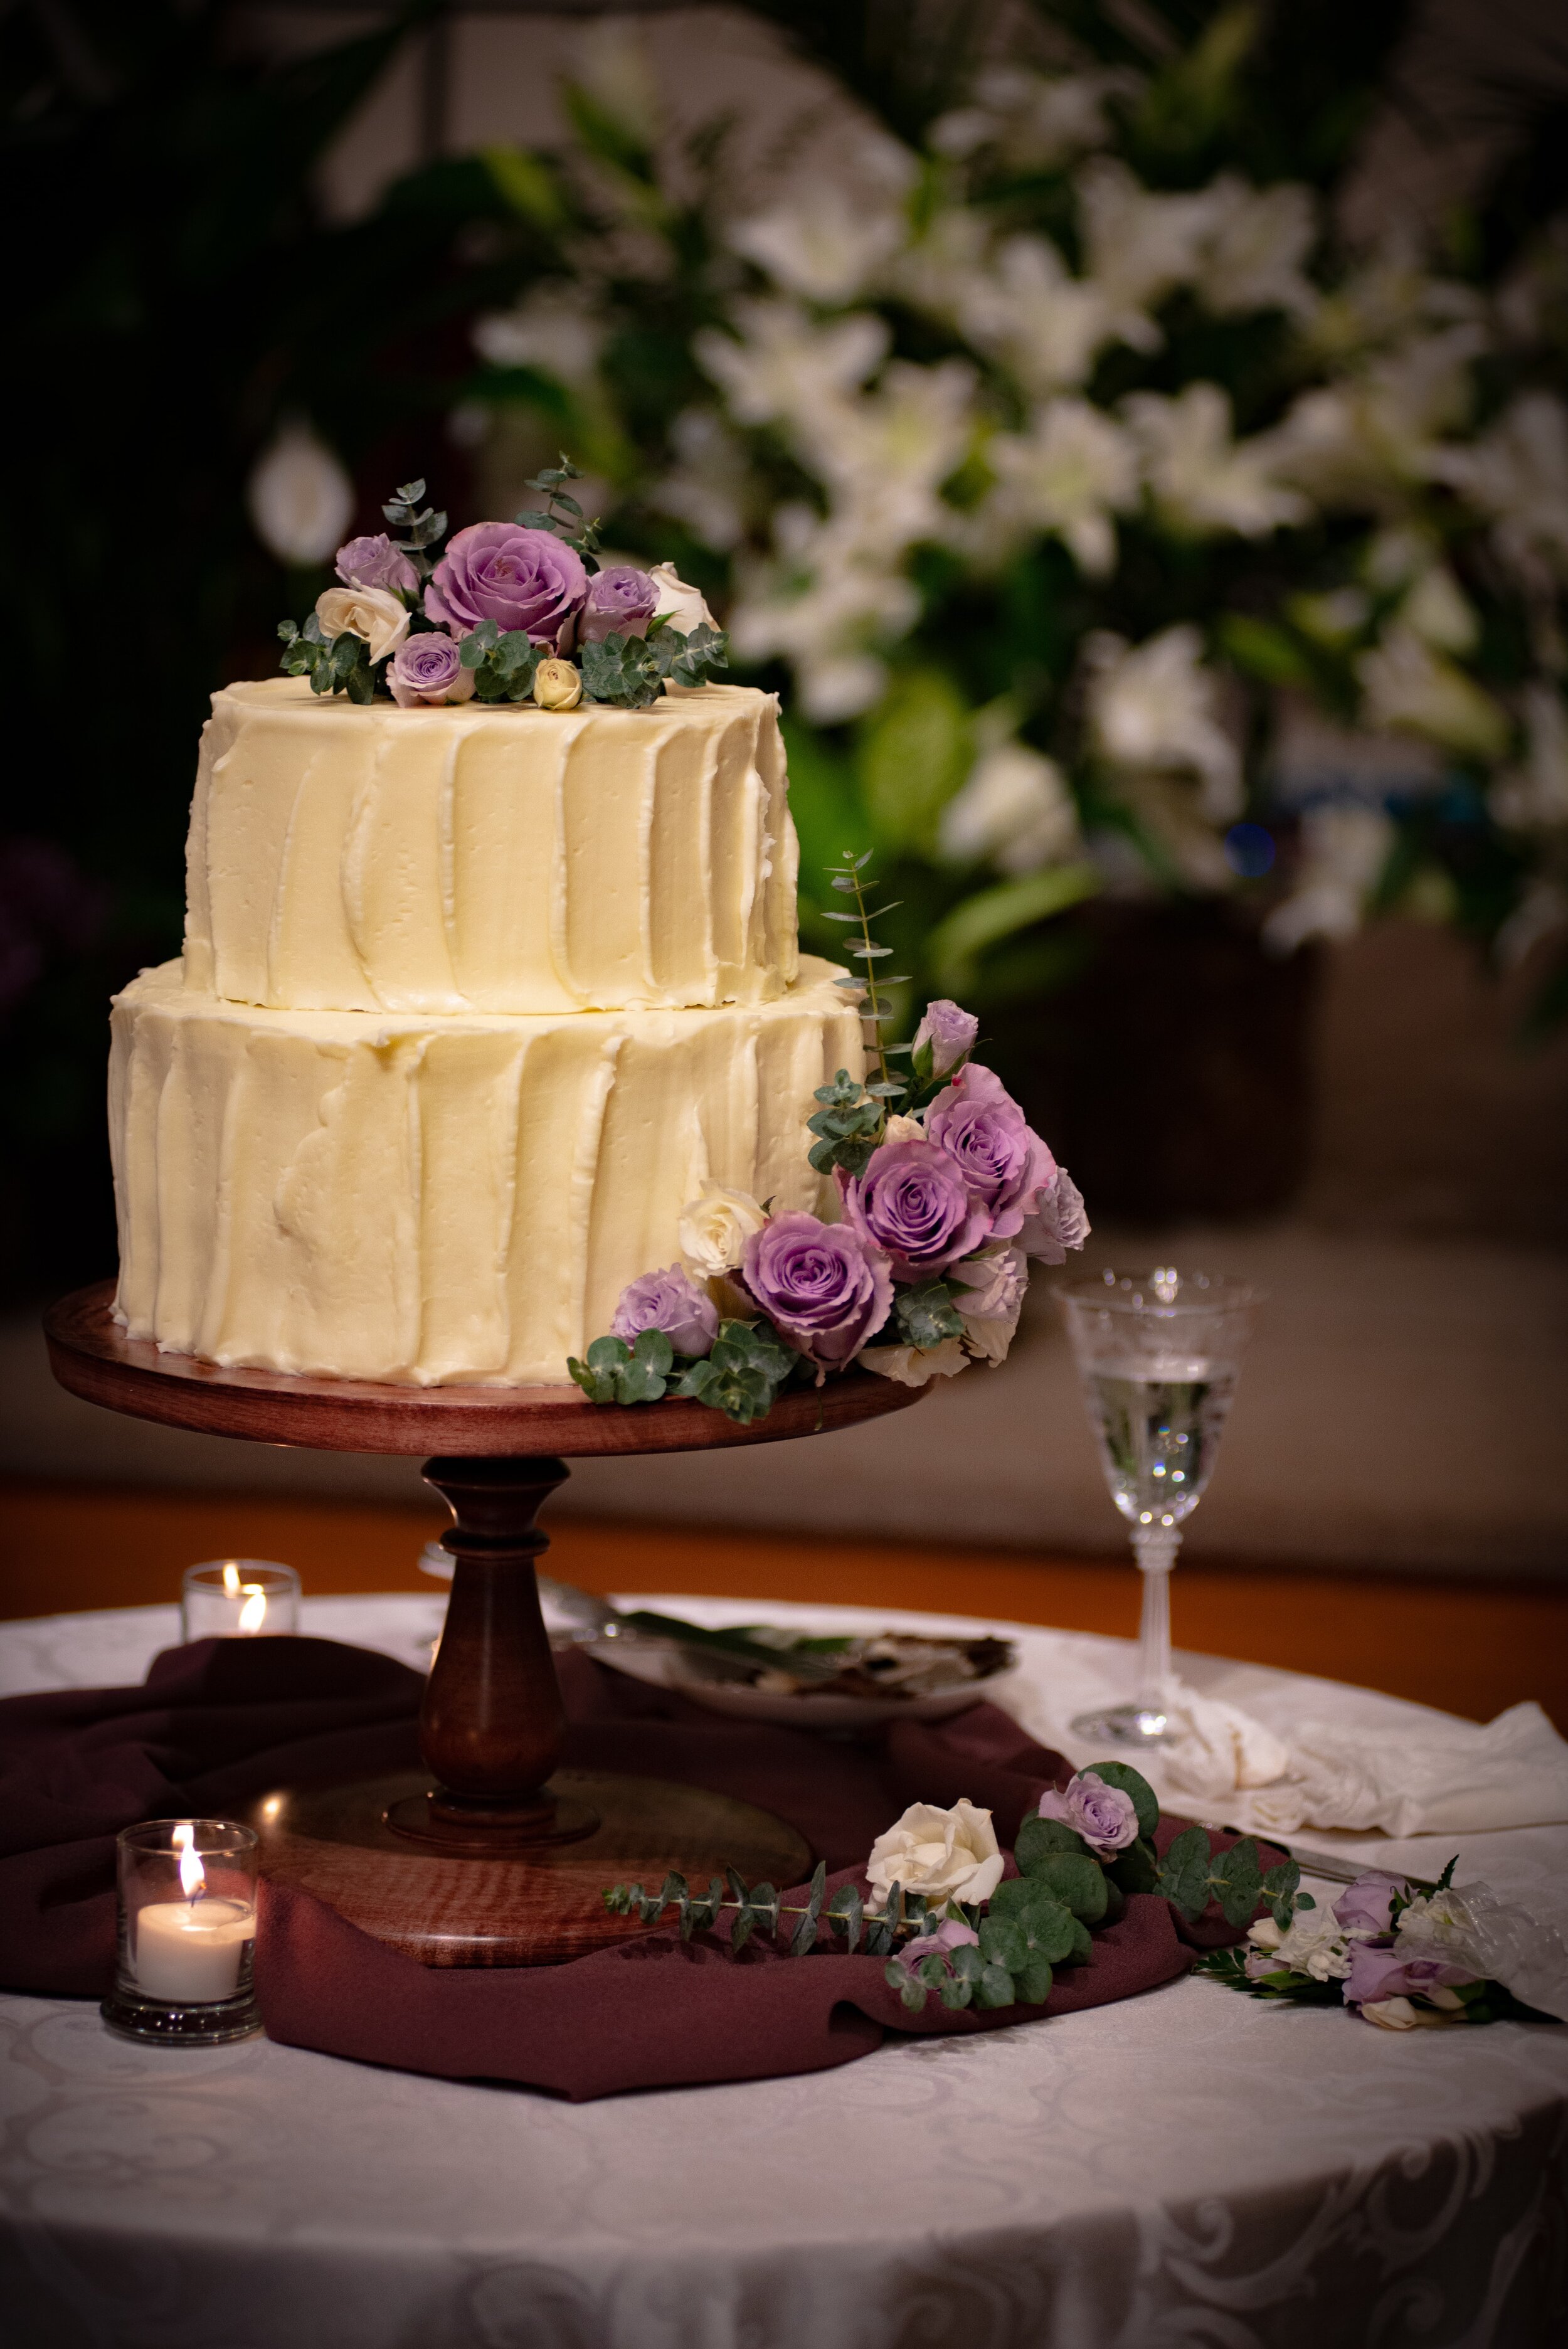 atn wedding cake david-holifield-g9LjAKD8hCI-unsplash.jpg